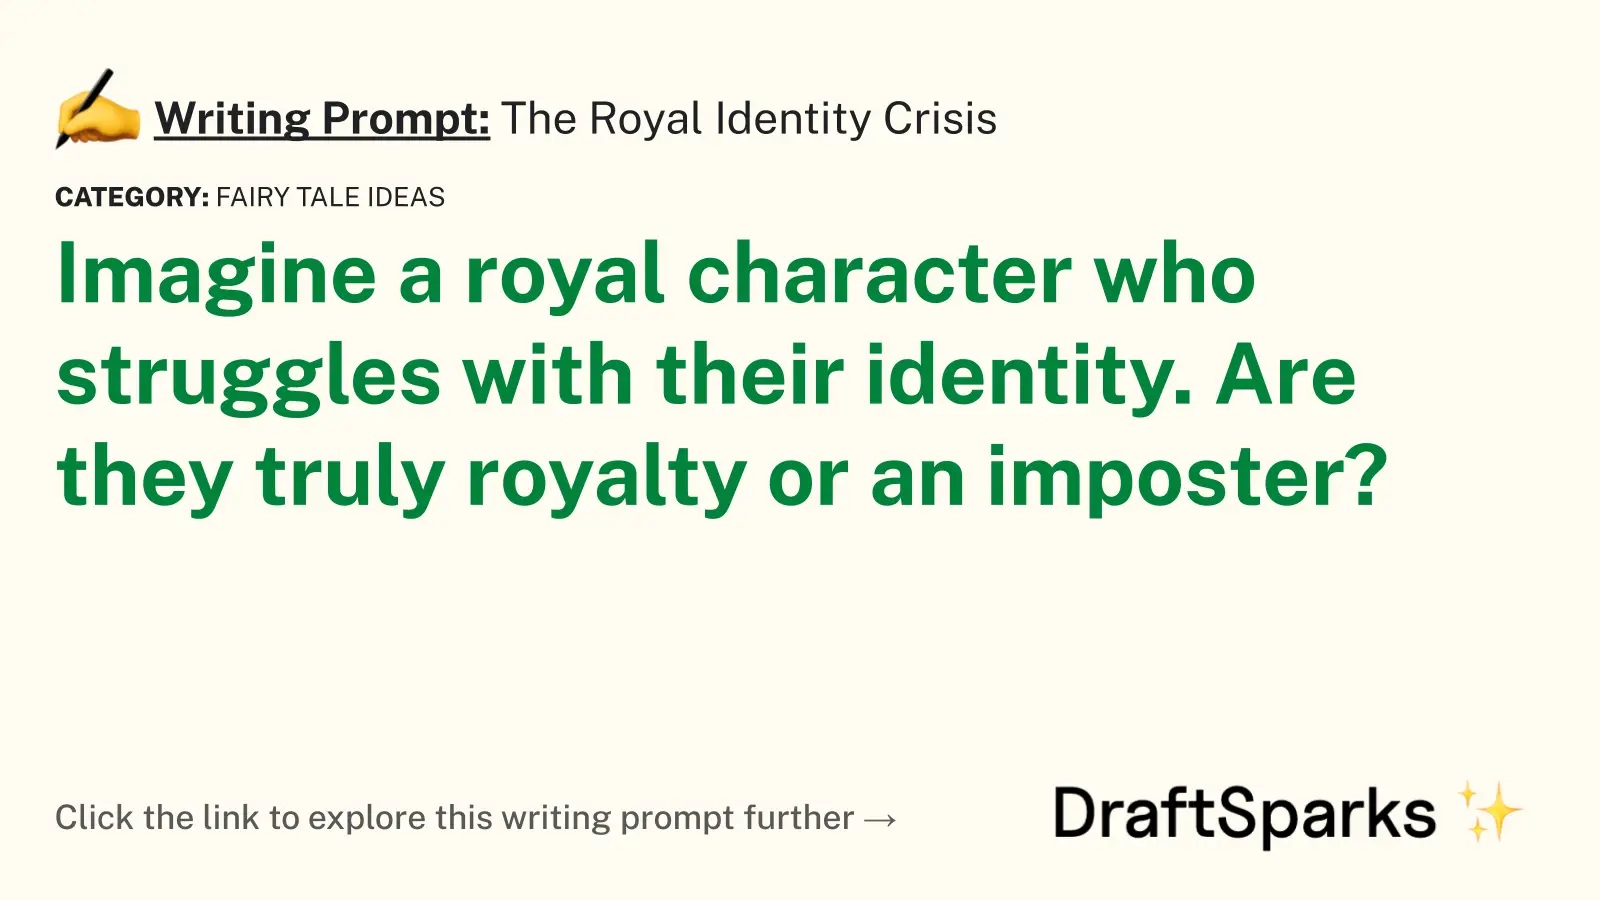 The Royal Identity Crisis